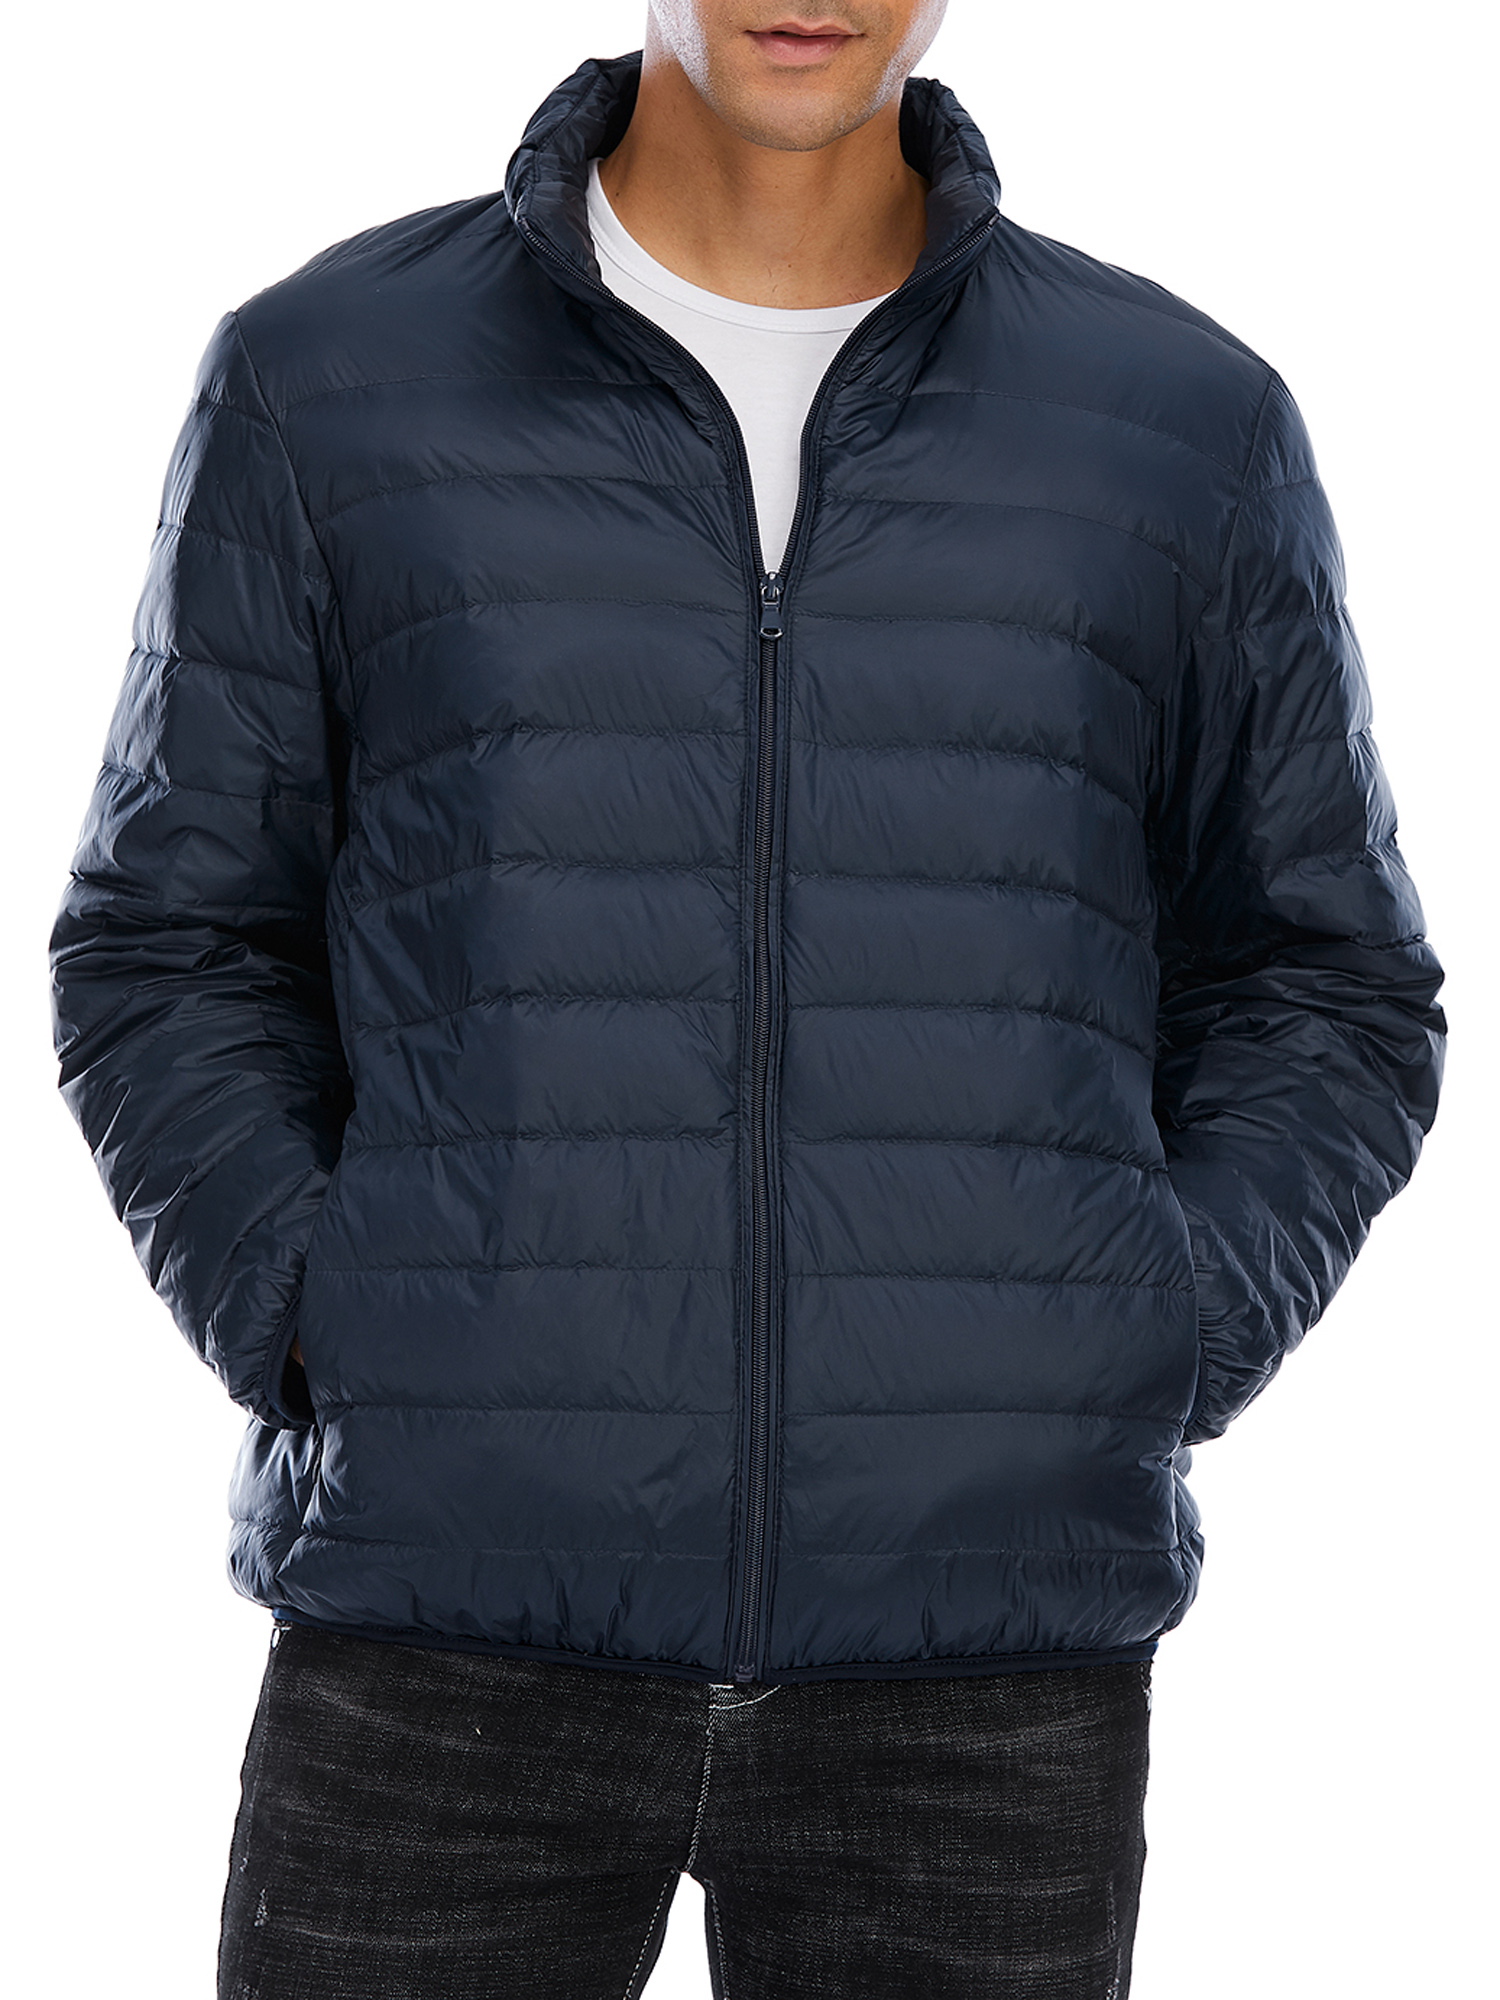 Men's Packable Down Jacket Winter Warm Jacket lightweight Zipper Jacket Puffer Bubble Coat Black Blue - image 1 of 7